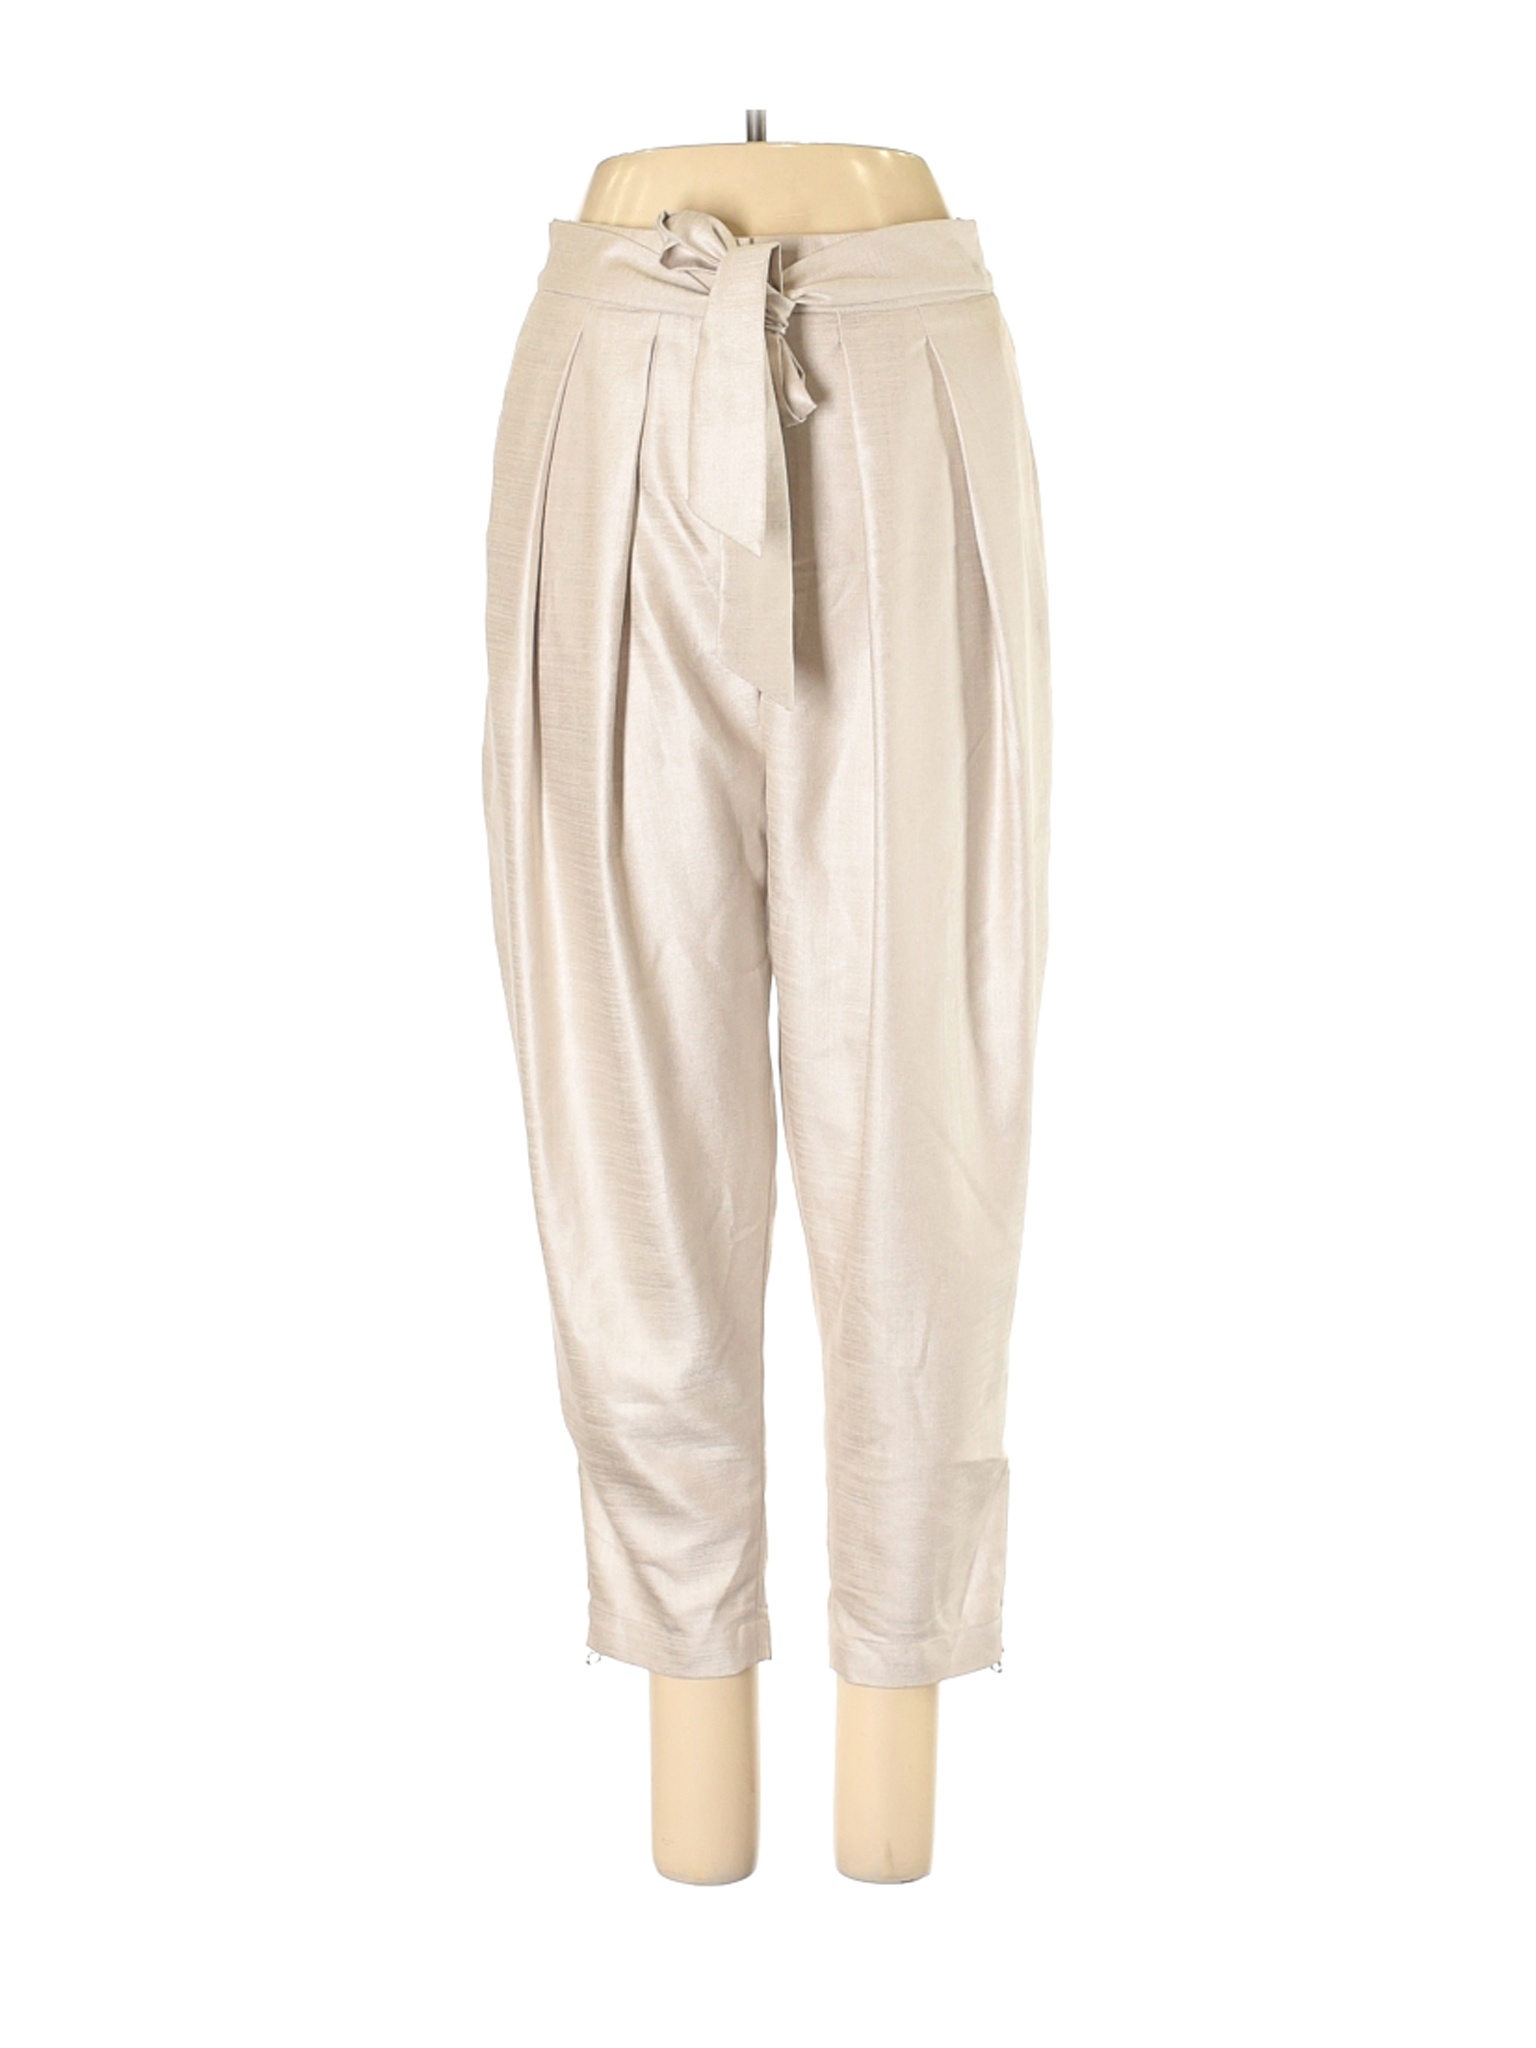 VPL Women Ivory Dress Pants P | eBay